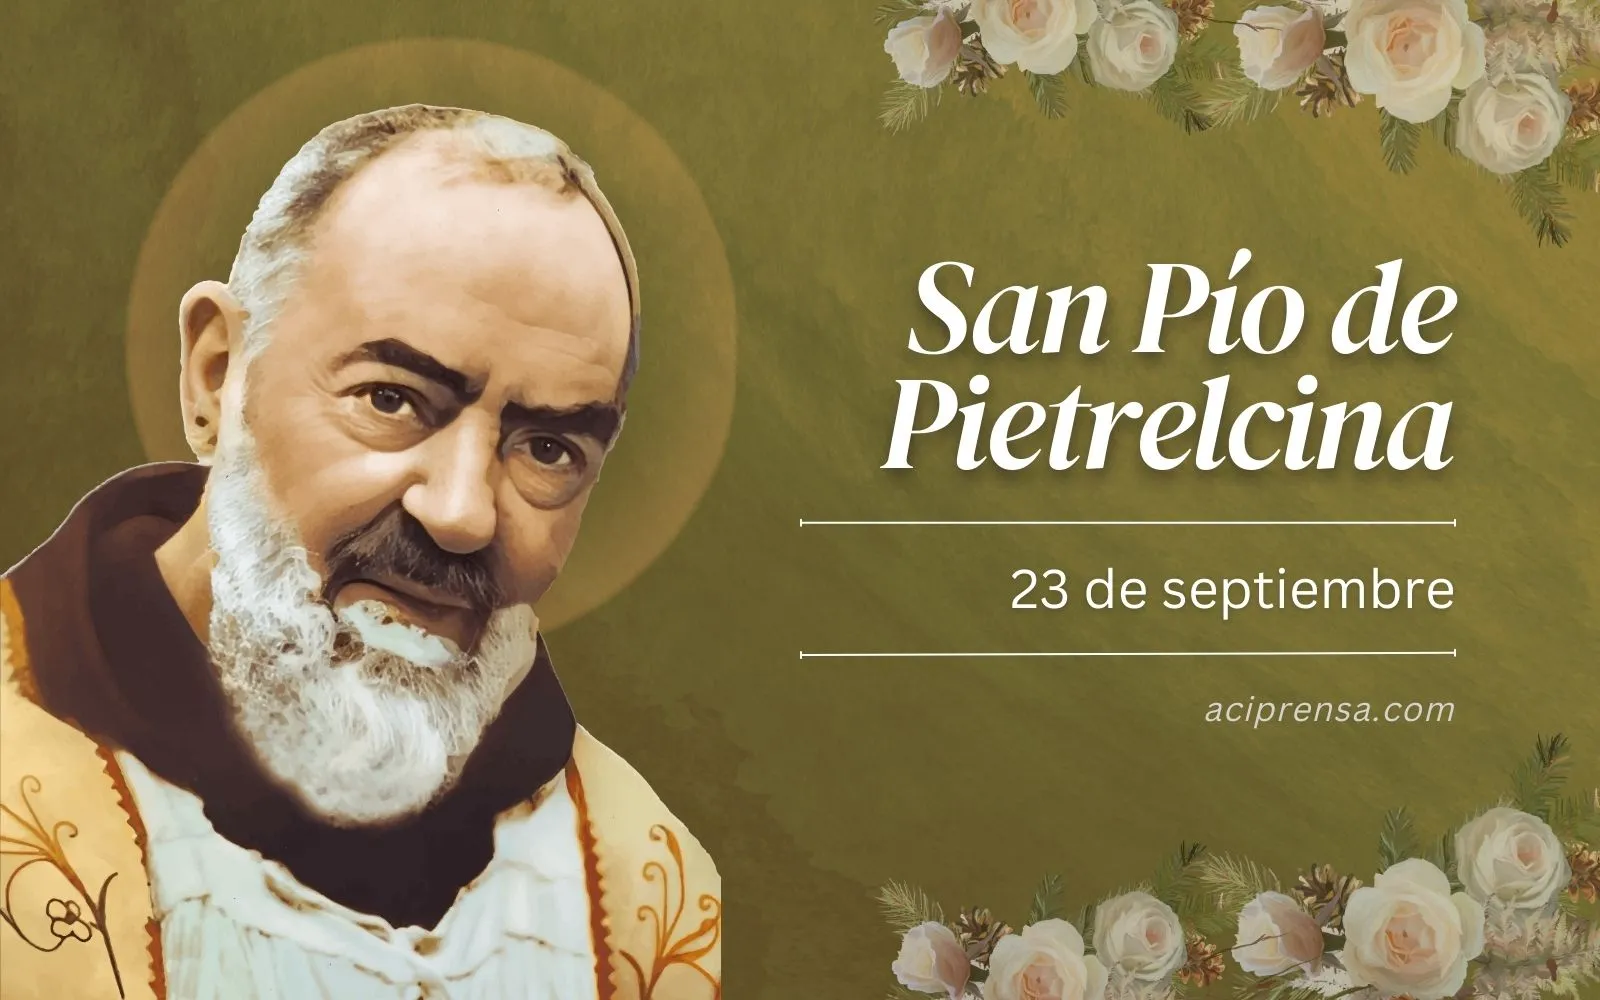 San Pío de Pietrelcina